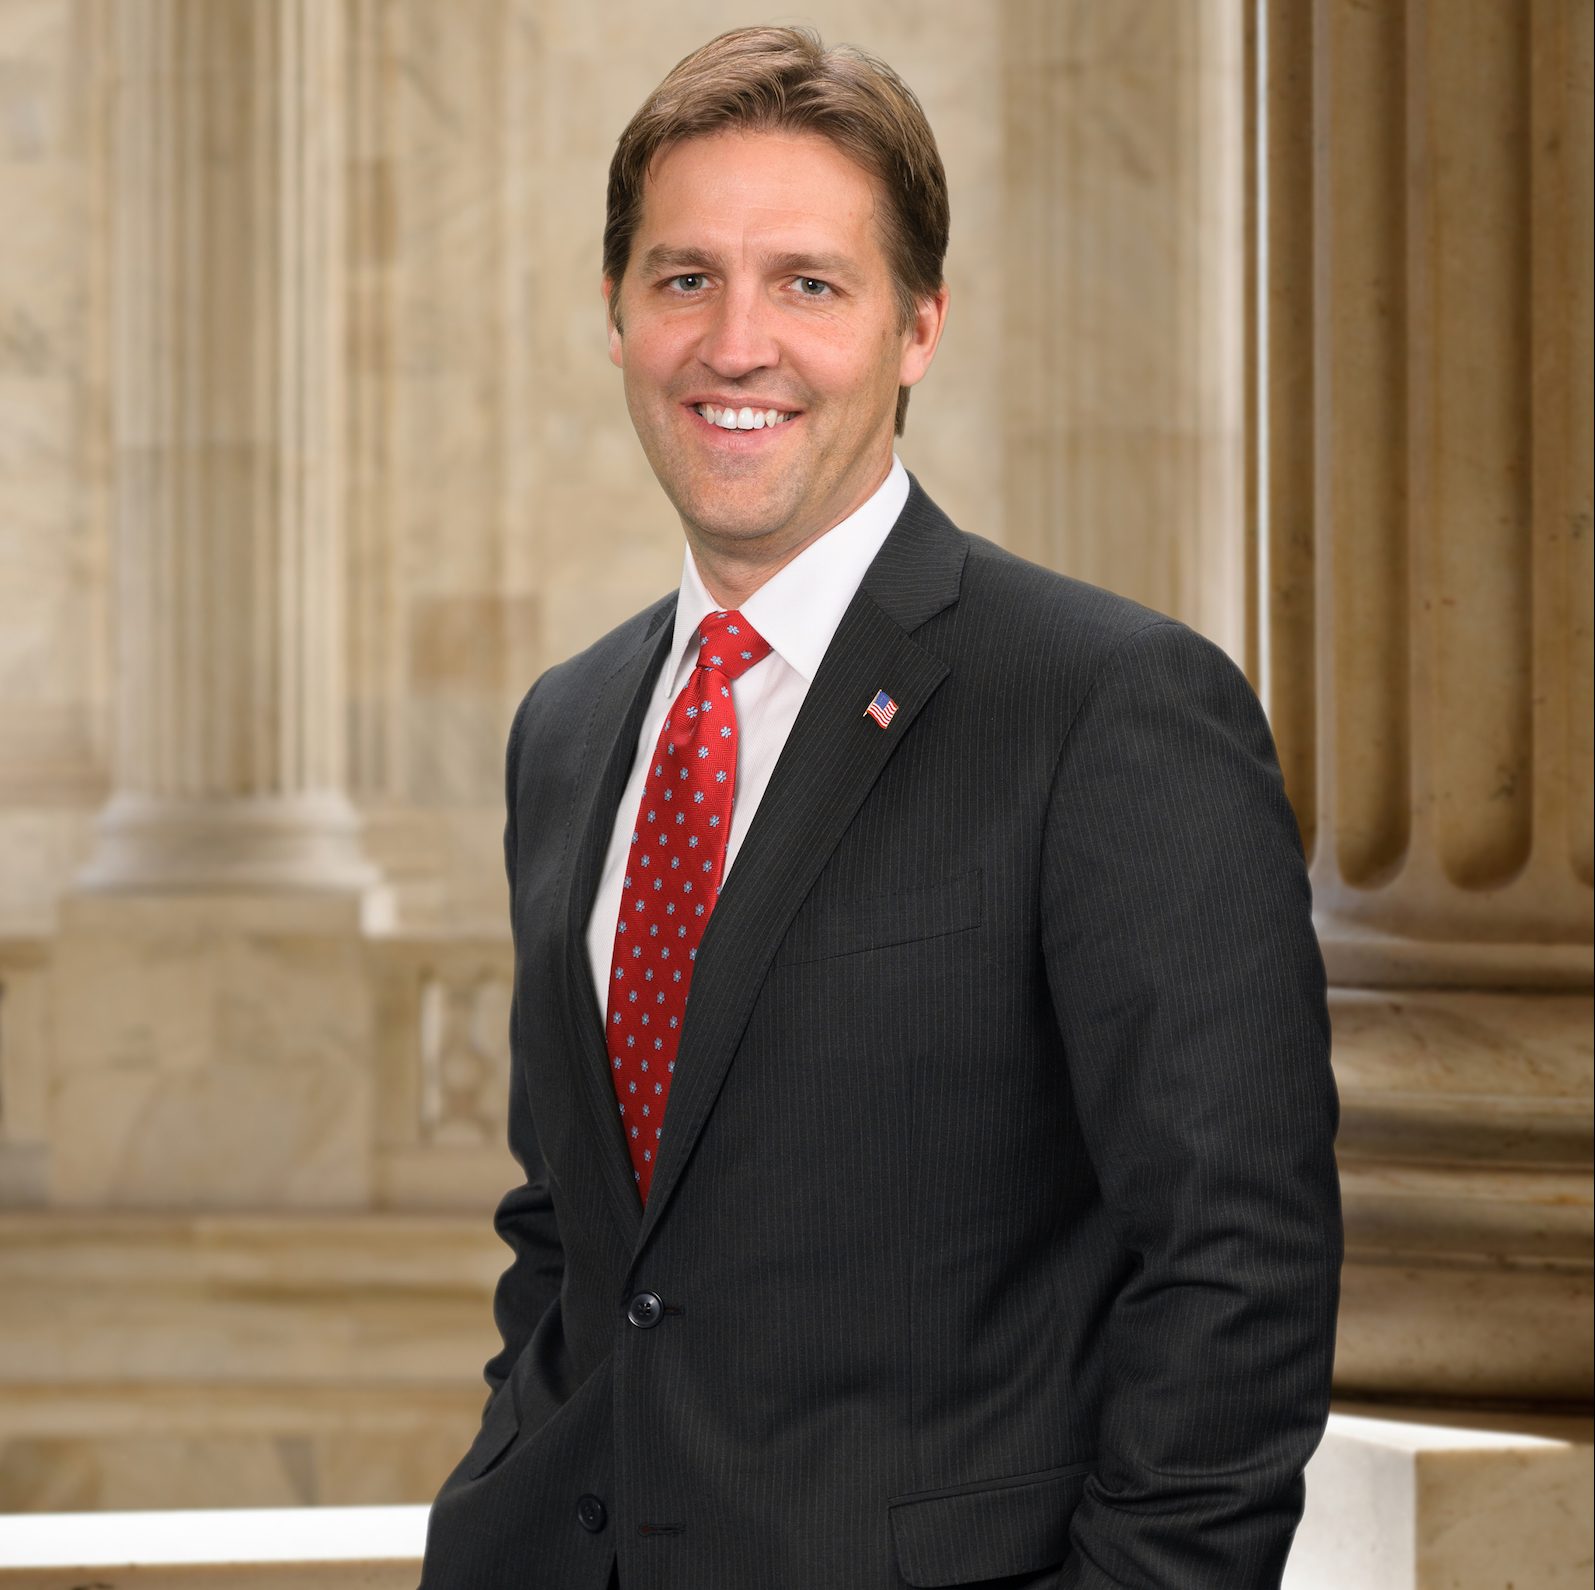 Portrait photo of Senator Ben Sasse in a suit.